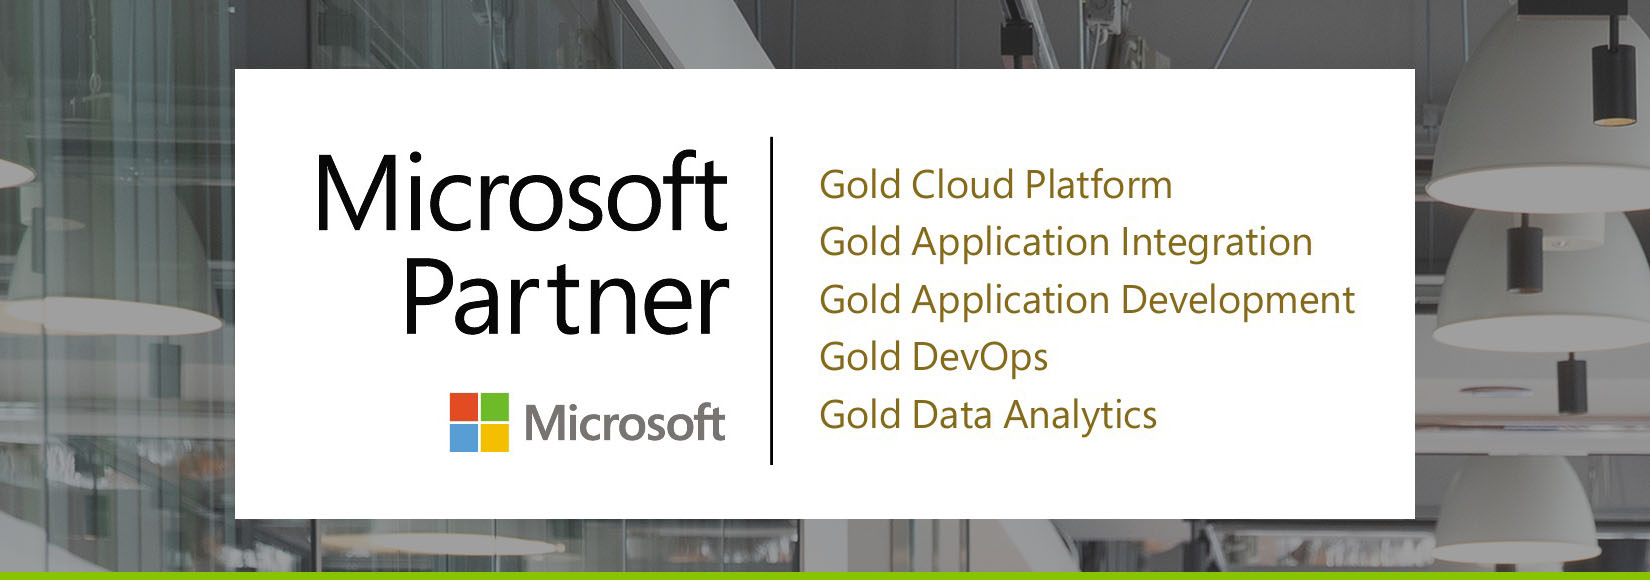 Microsoft（マイクロソフト） Gold コンピテンシー - Cloud Platform, Application Integration, Application Development, DevOps, Data Analytics